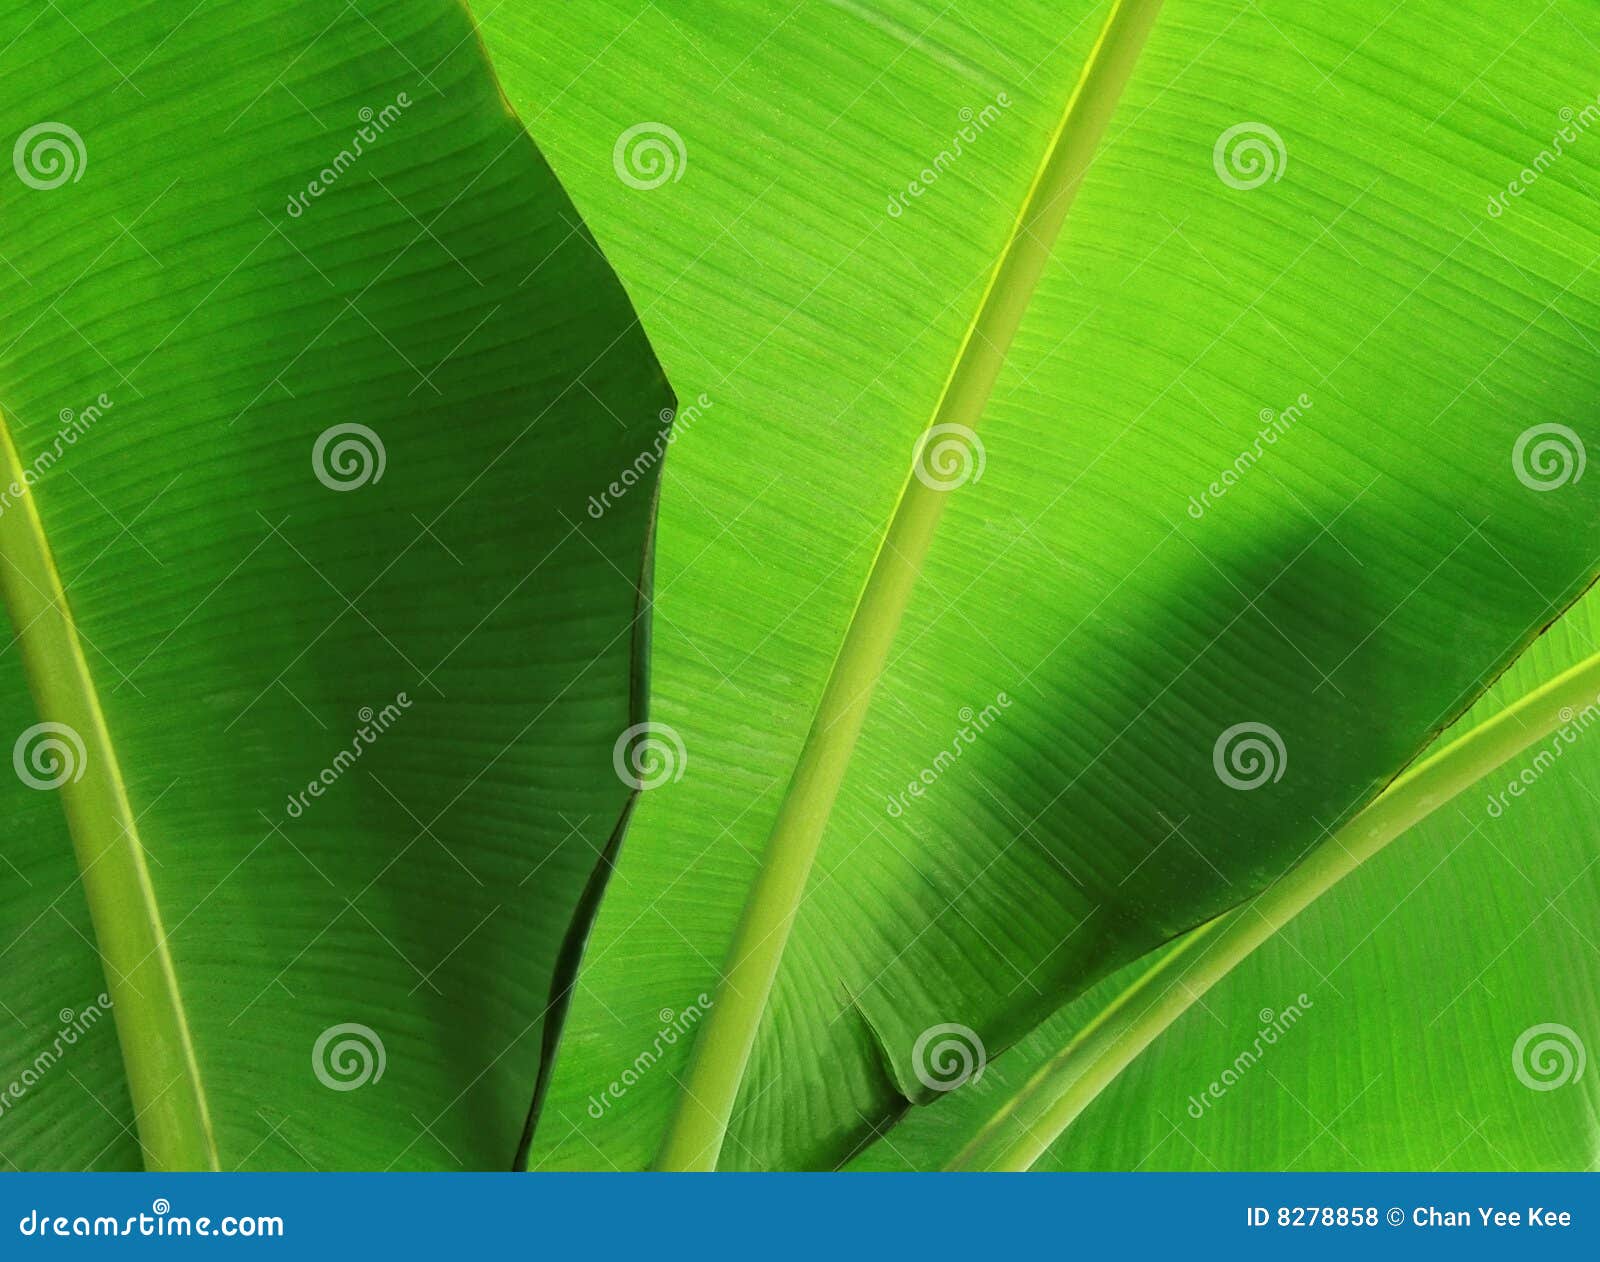 banana leaf close-up